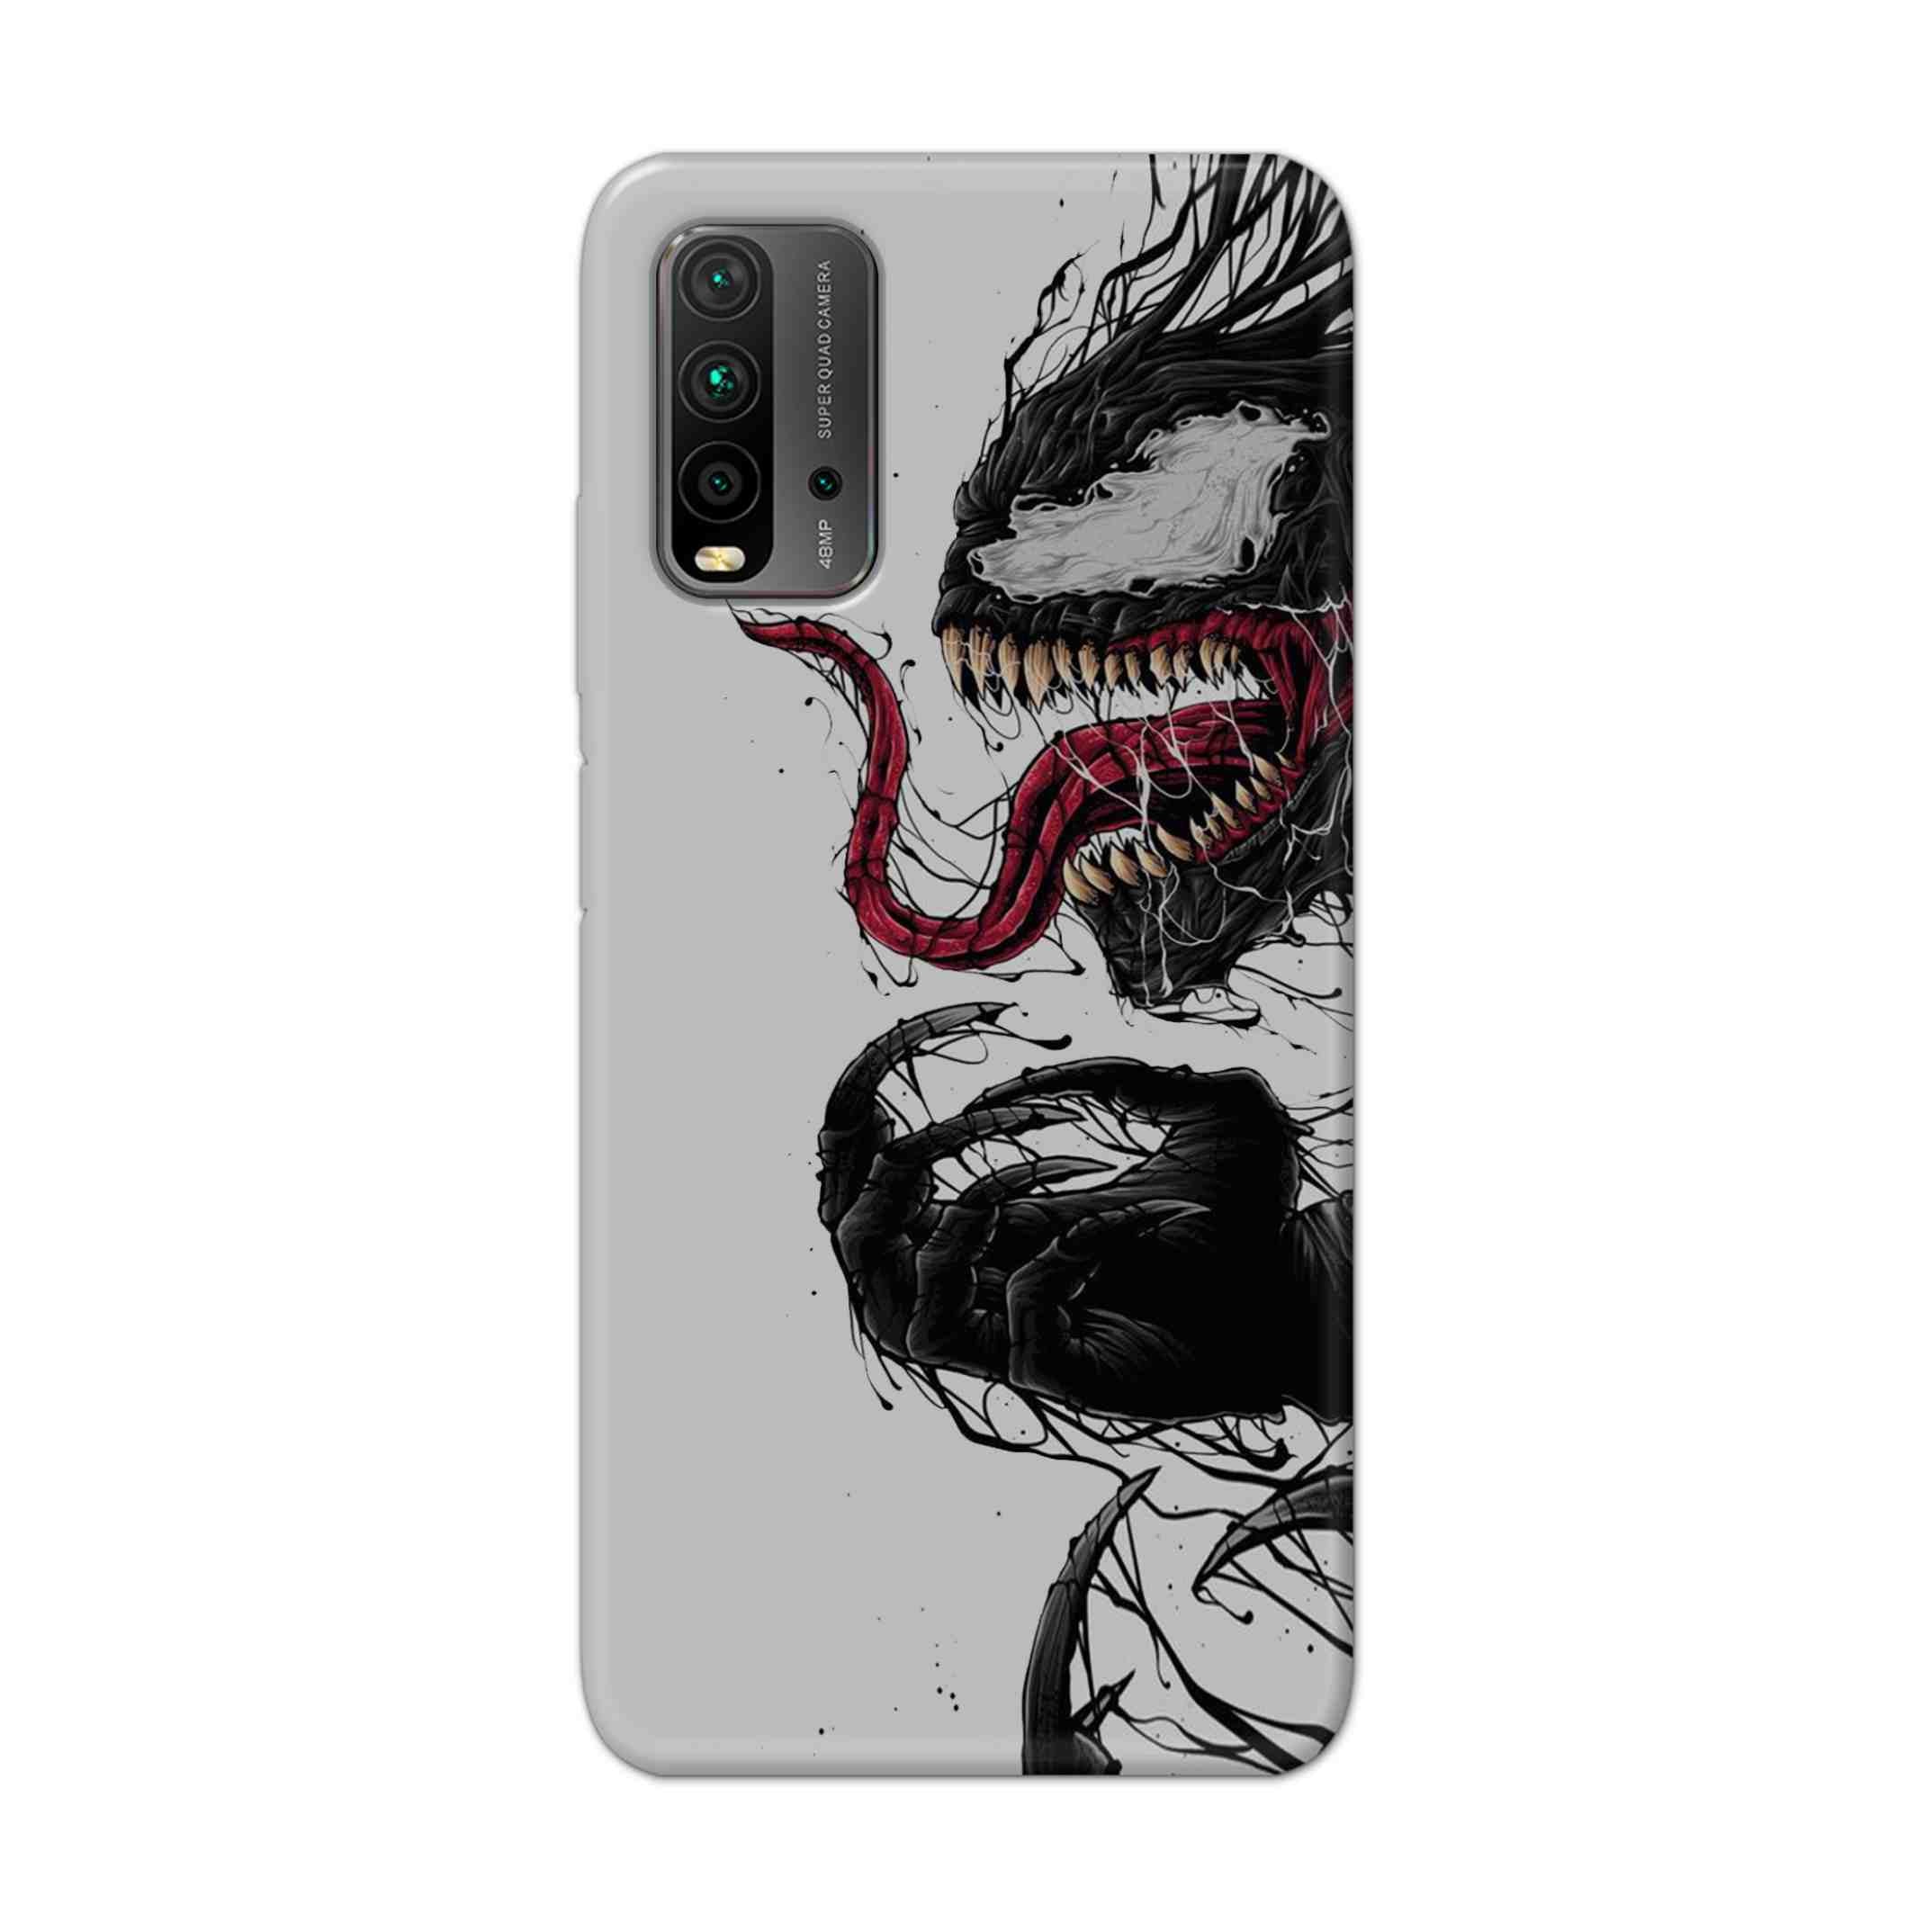 Buy Venom Crazy Hard Back Mobile Phone Case Cover For Redmi 9 Power Online